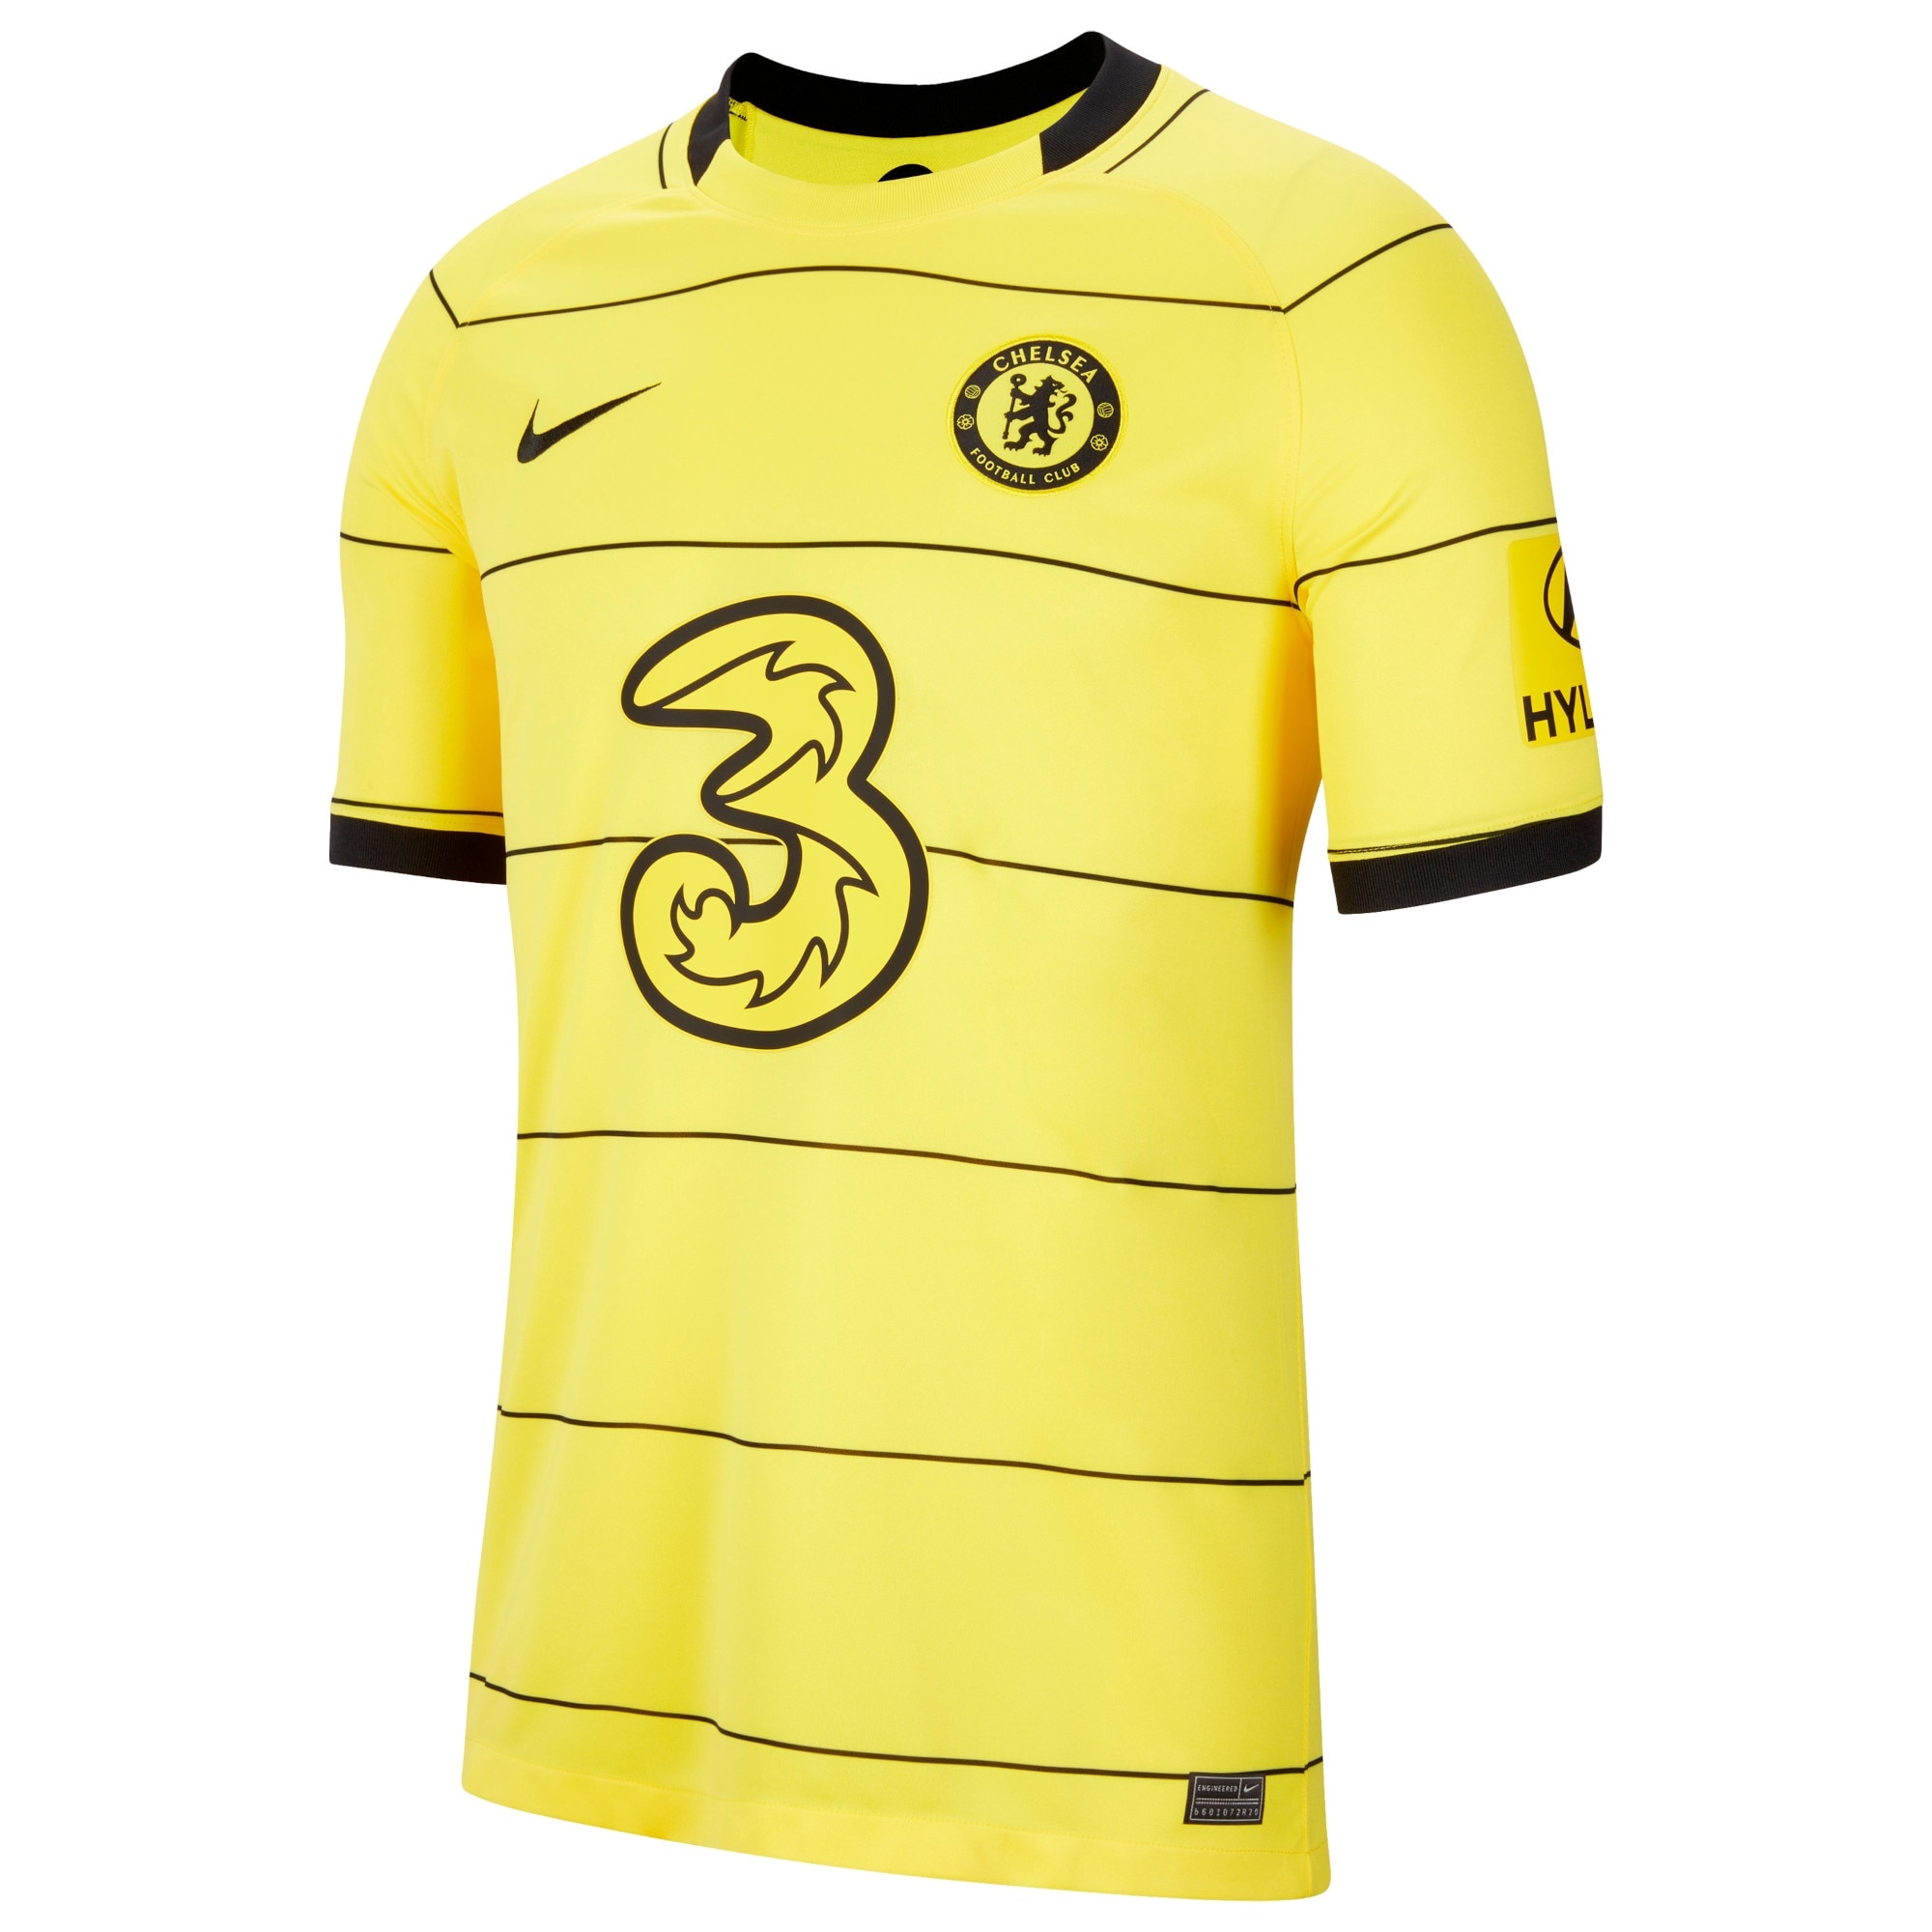 Chelsea Away Stadium Shirt 2021-22 with Barkley 18 printing